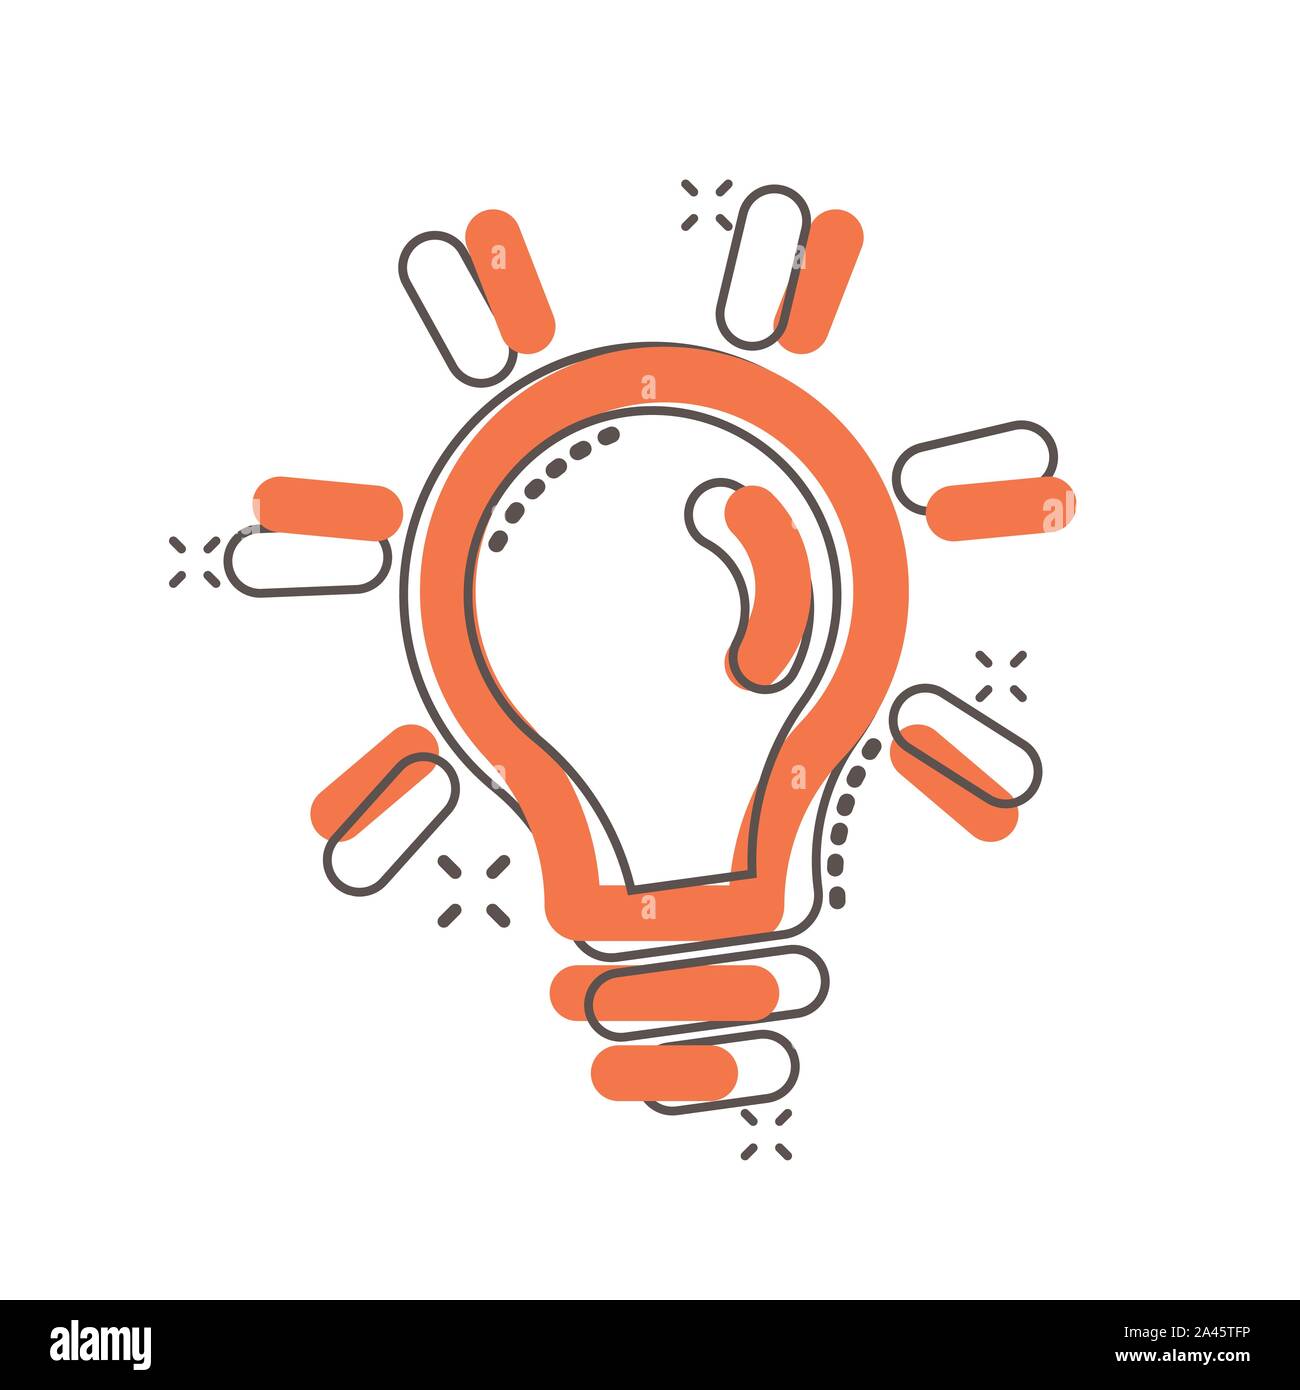 Light bulb icon in comic style. Lightbulb vector cartoon illustration pictogram. Lamp idea business concept splash effect. Stock Vector